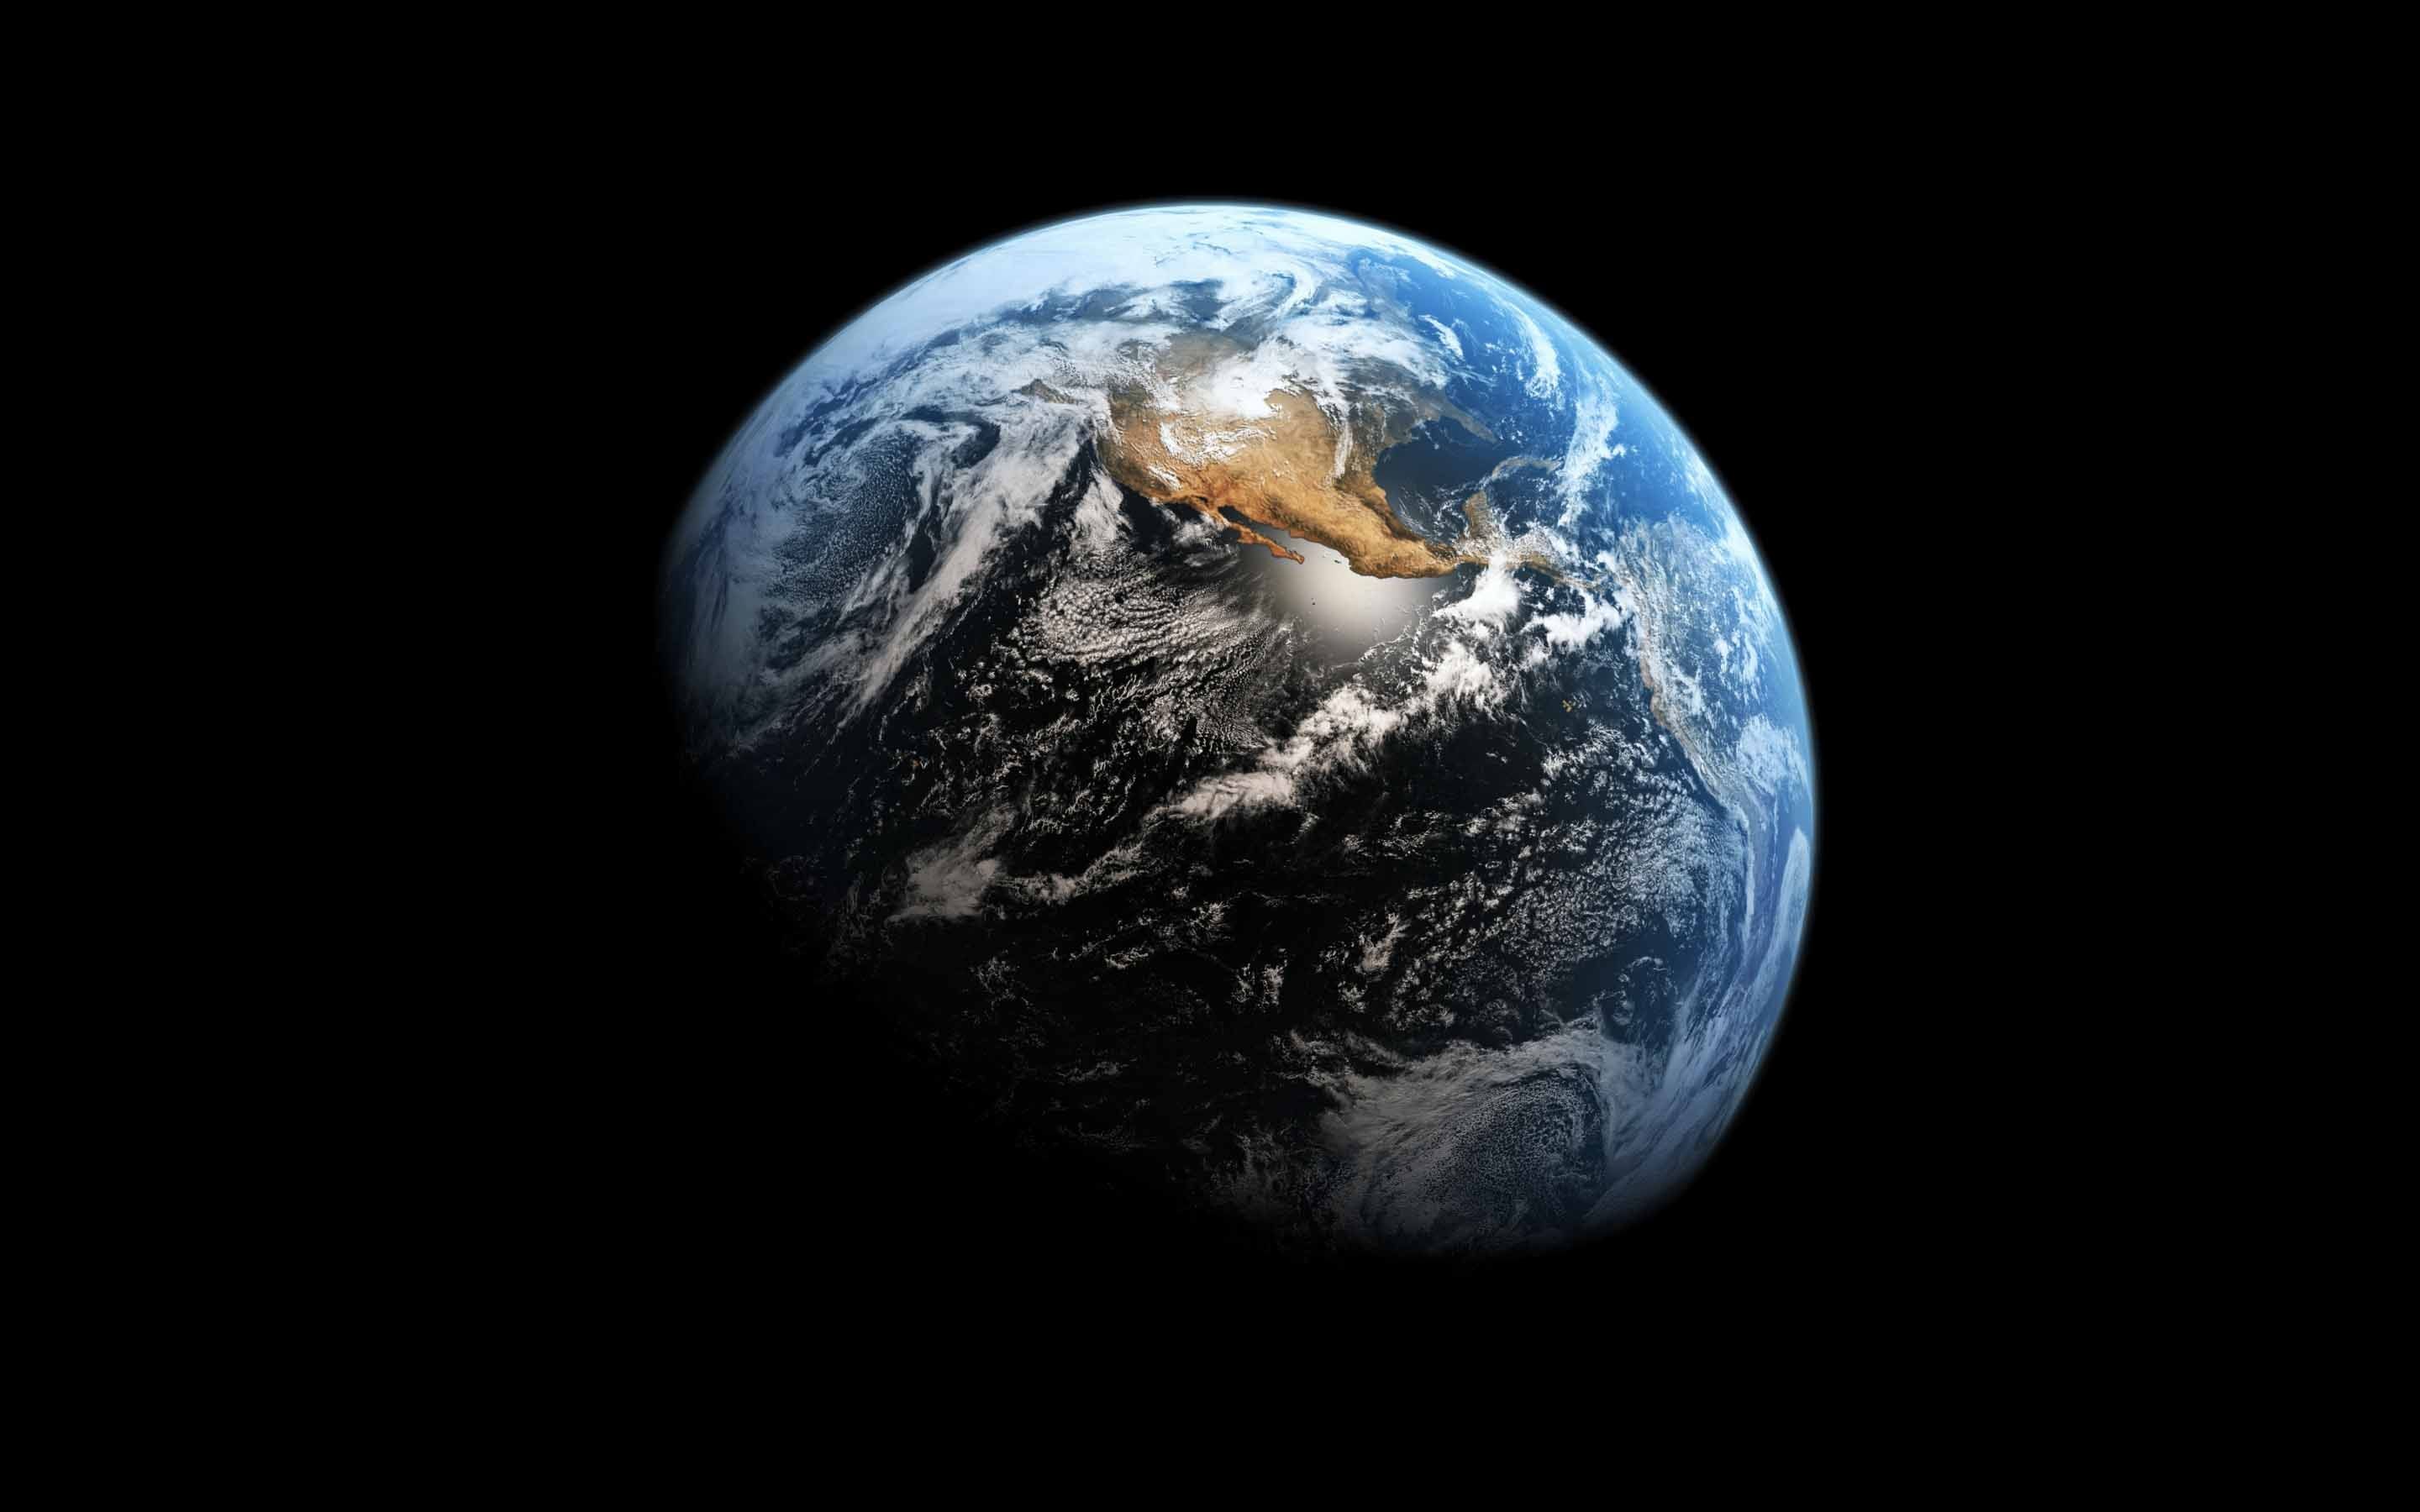 The Earth Mac Wallpaper Download | Free Mac Wallpapers Download